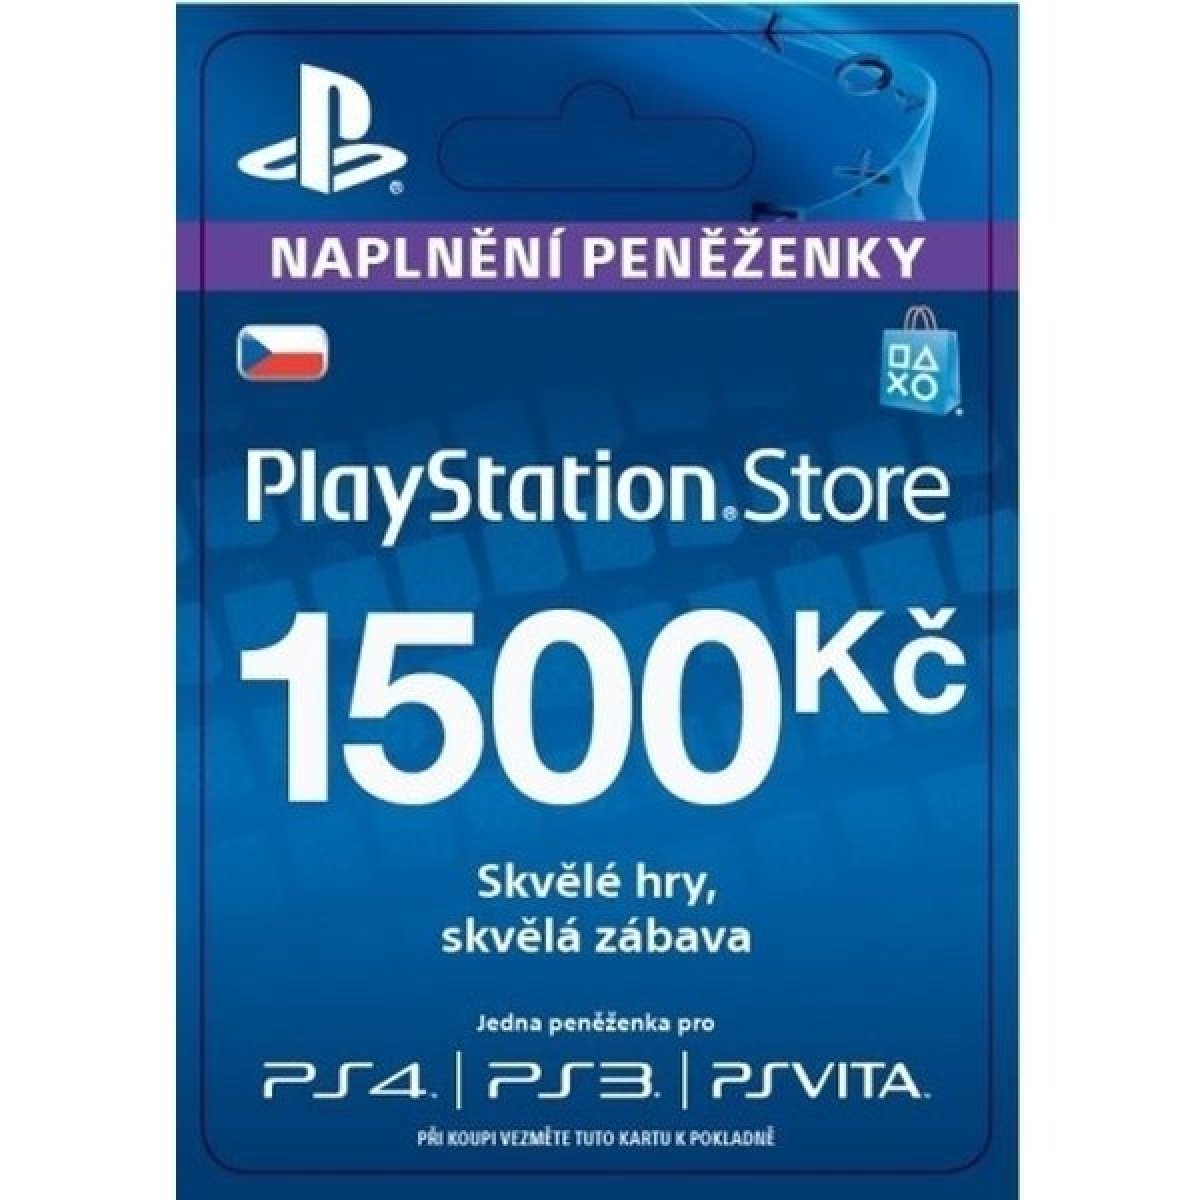 PlayStation Store predplatená karta 1500 Kč od 58,8 € - Heureka.sk